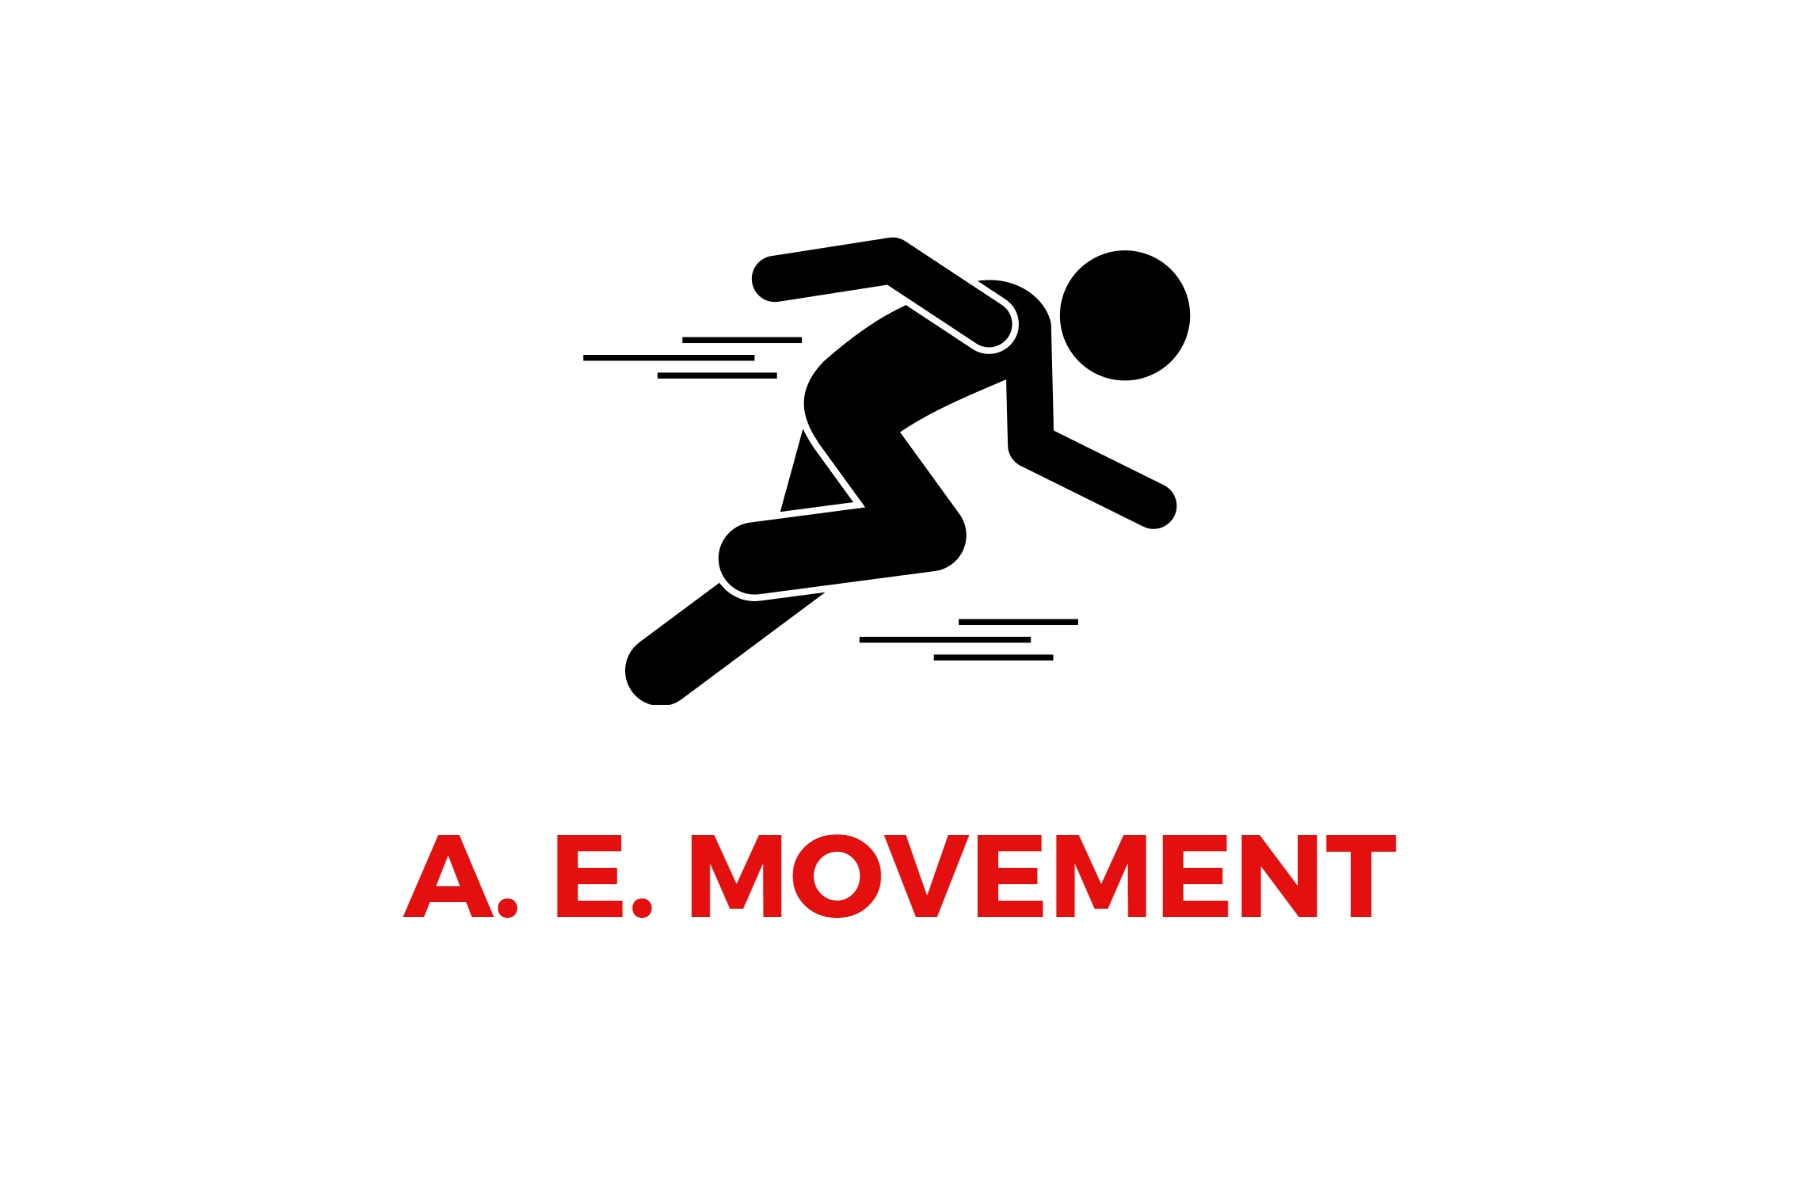 AE movement